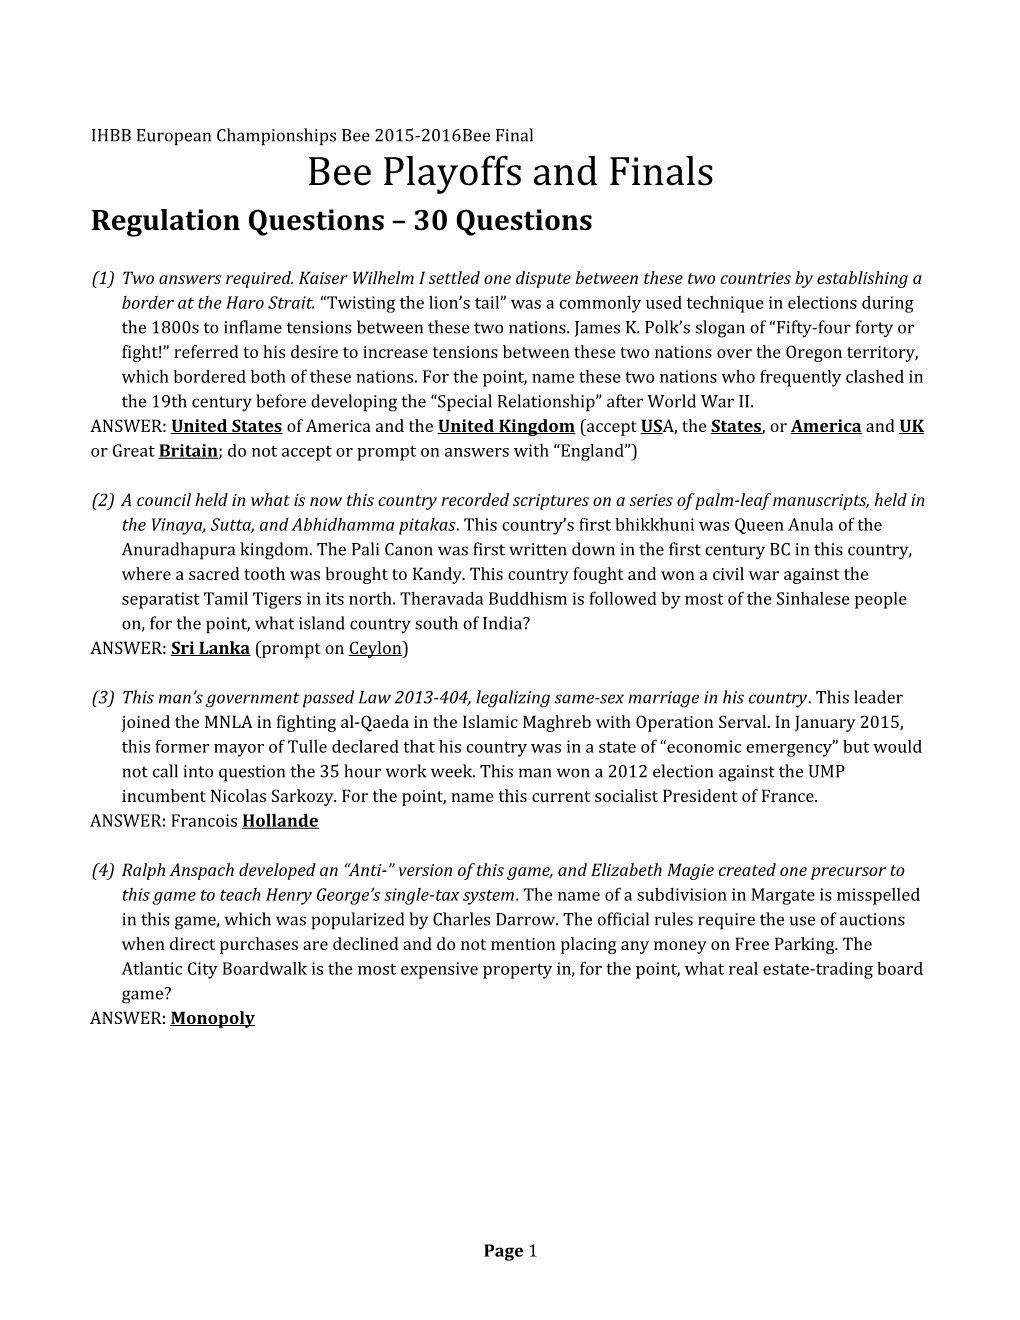 Bee Playoffs and Finals